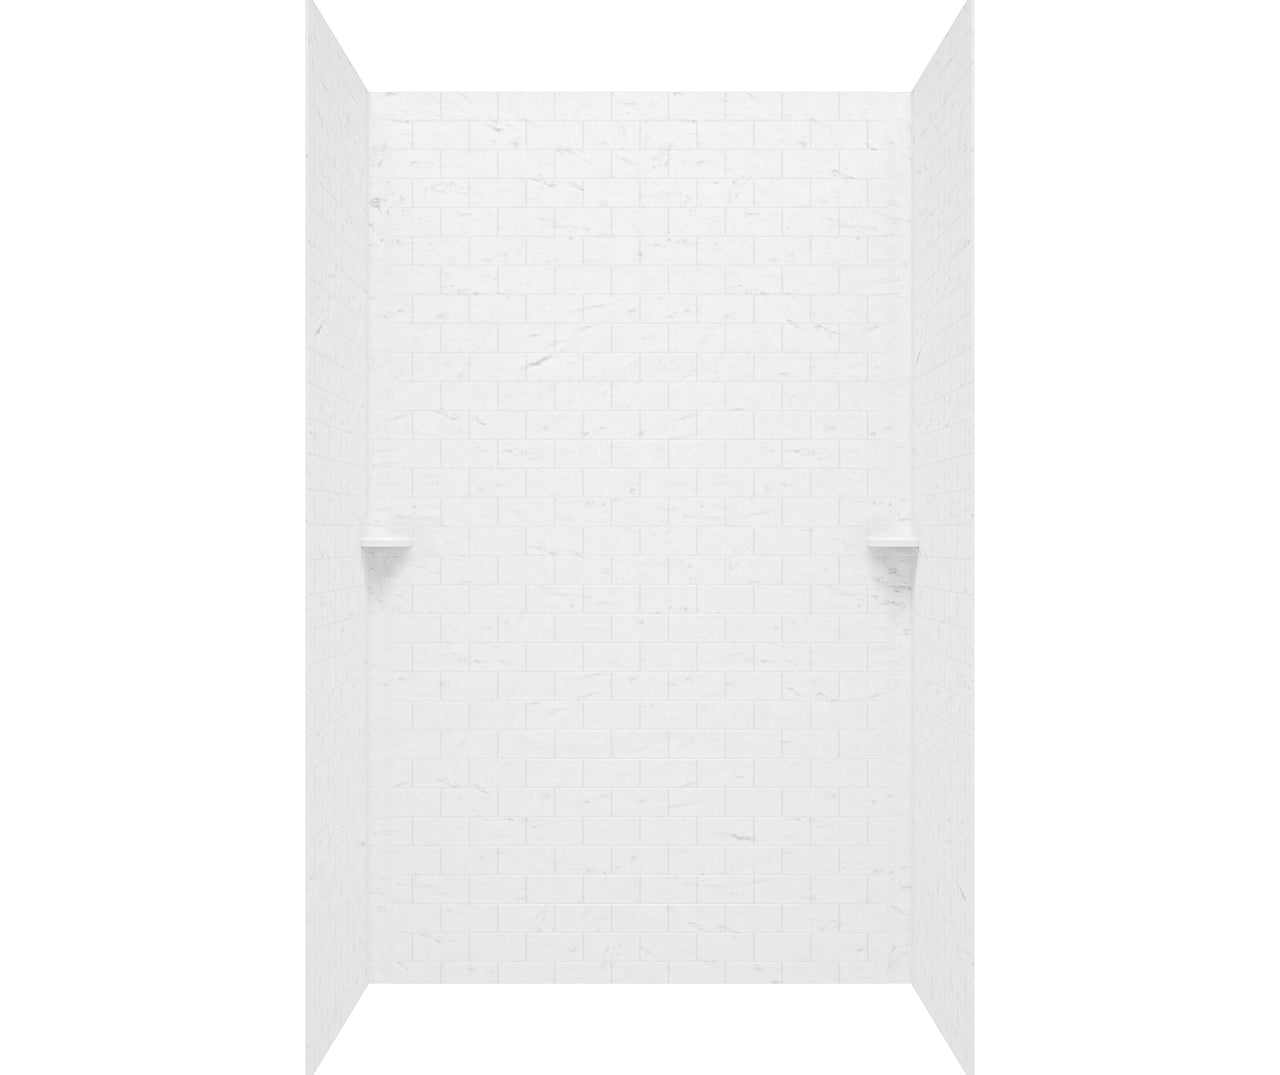 36" x 36" x 72" Swanstone 3x6 Subway Tile Shower Wall Kit - BNGBath